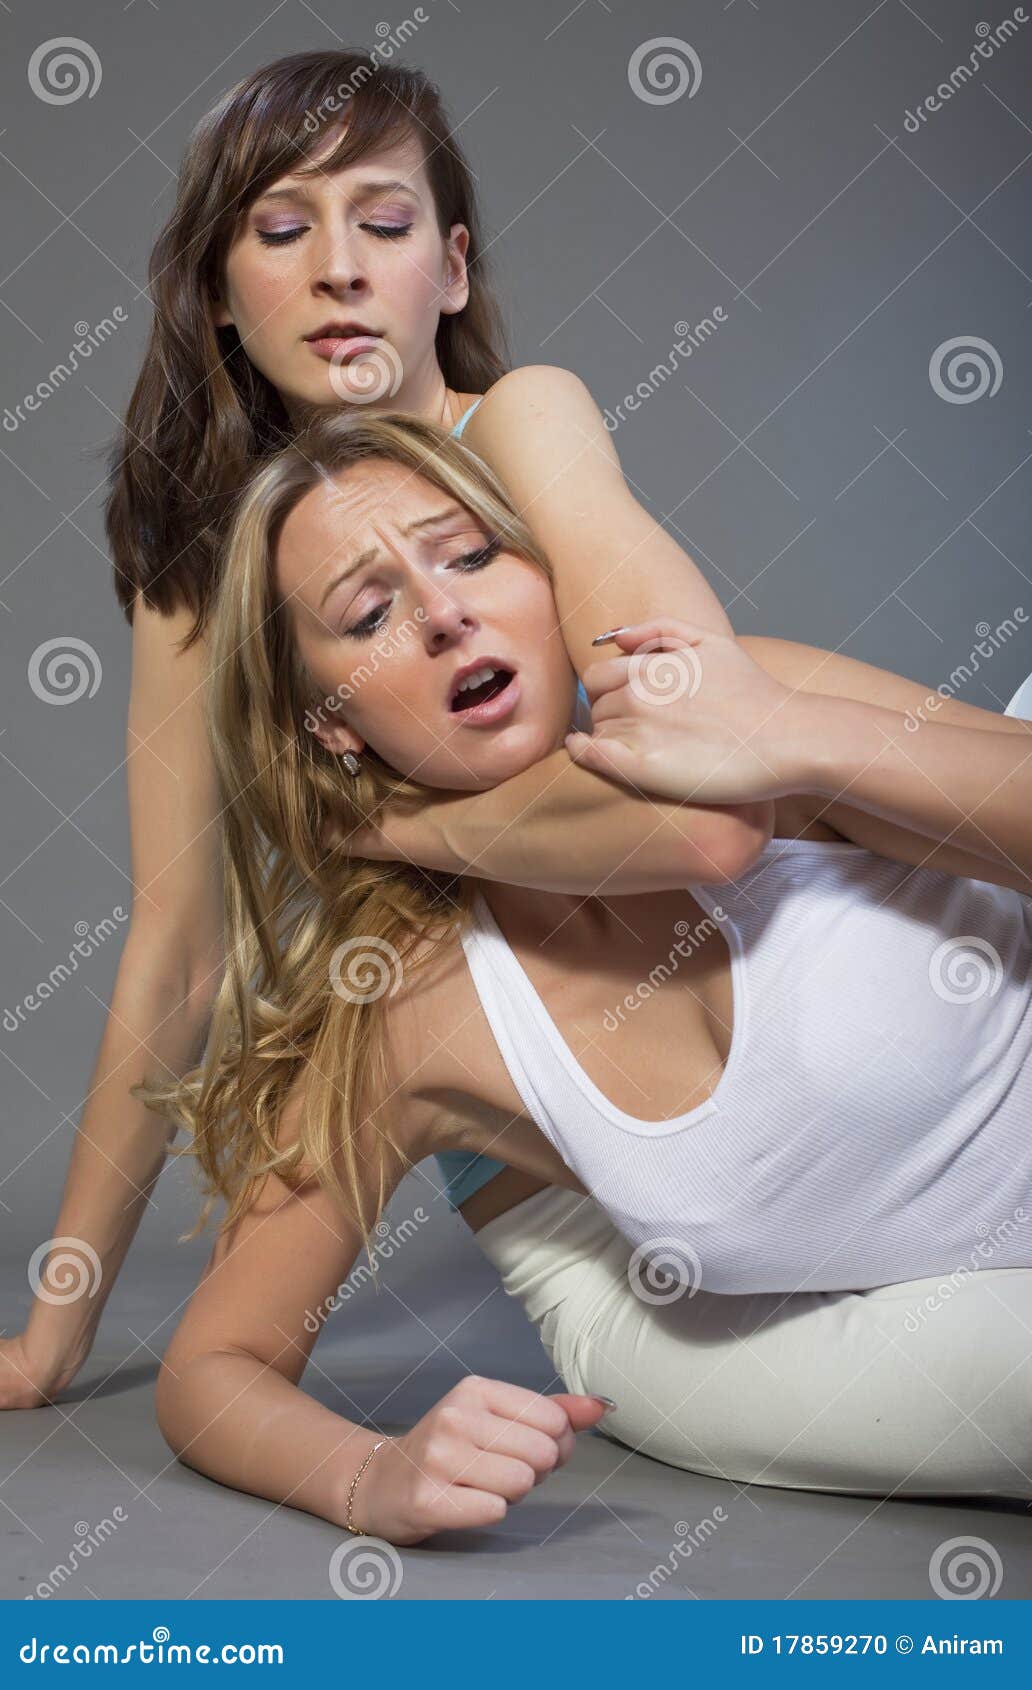 Painful choke hold stock photo. Image of anger, strangling - 17859270